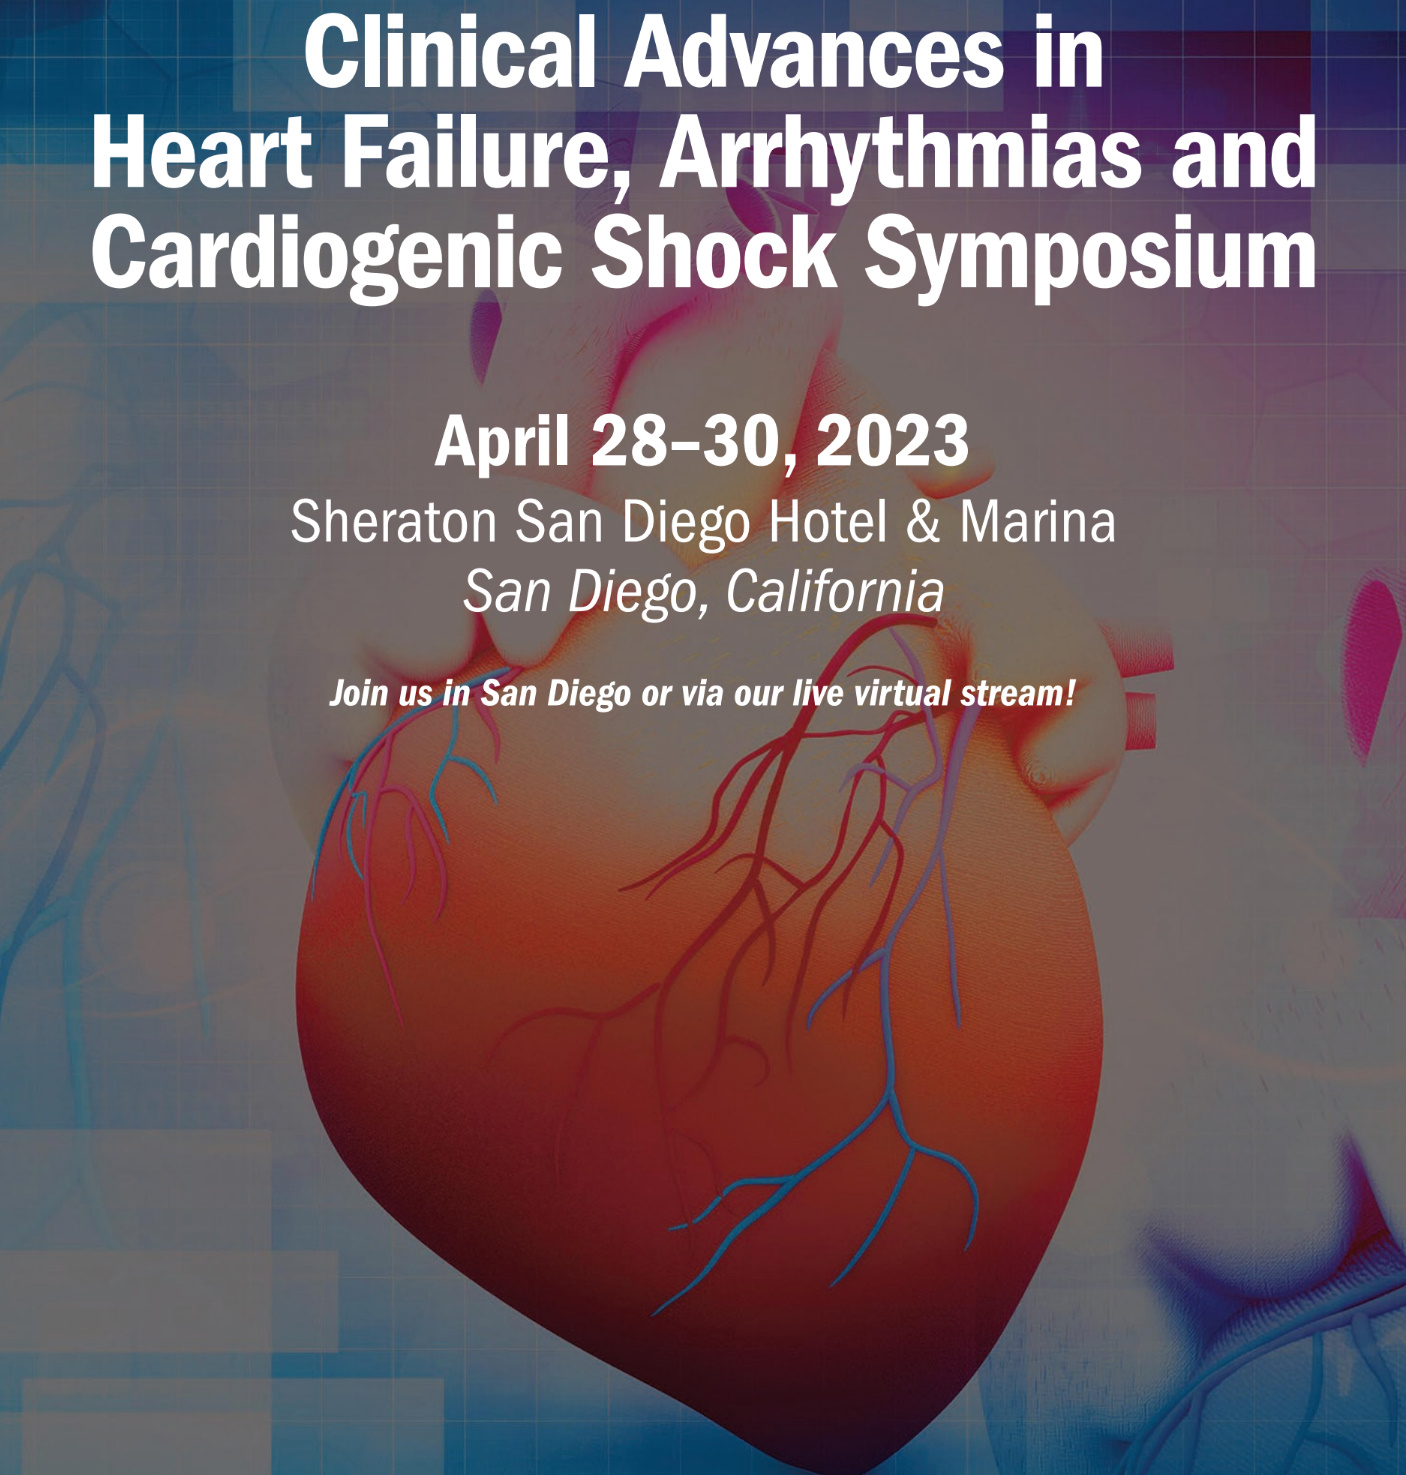 Scripps Clinical Advances in Heart Failure, Arrhythmias and Cardiogenic Shock Symposium 2023